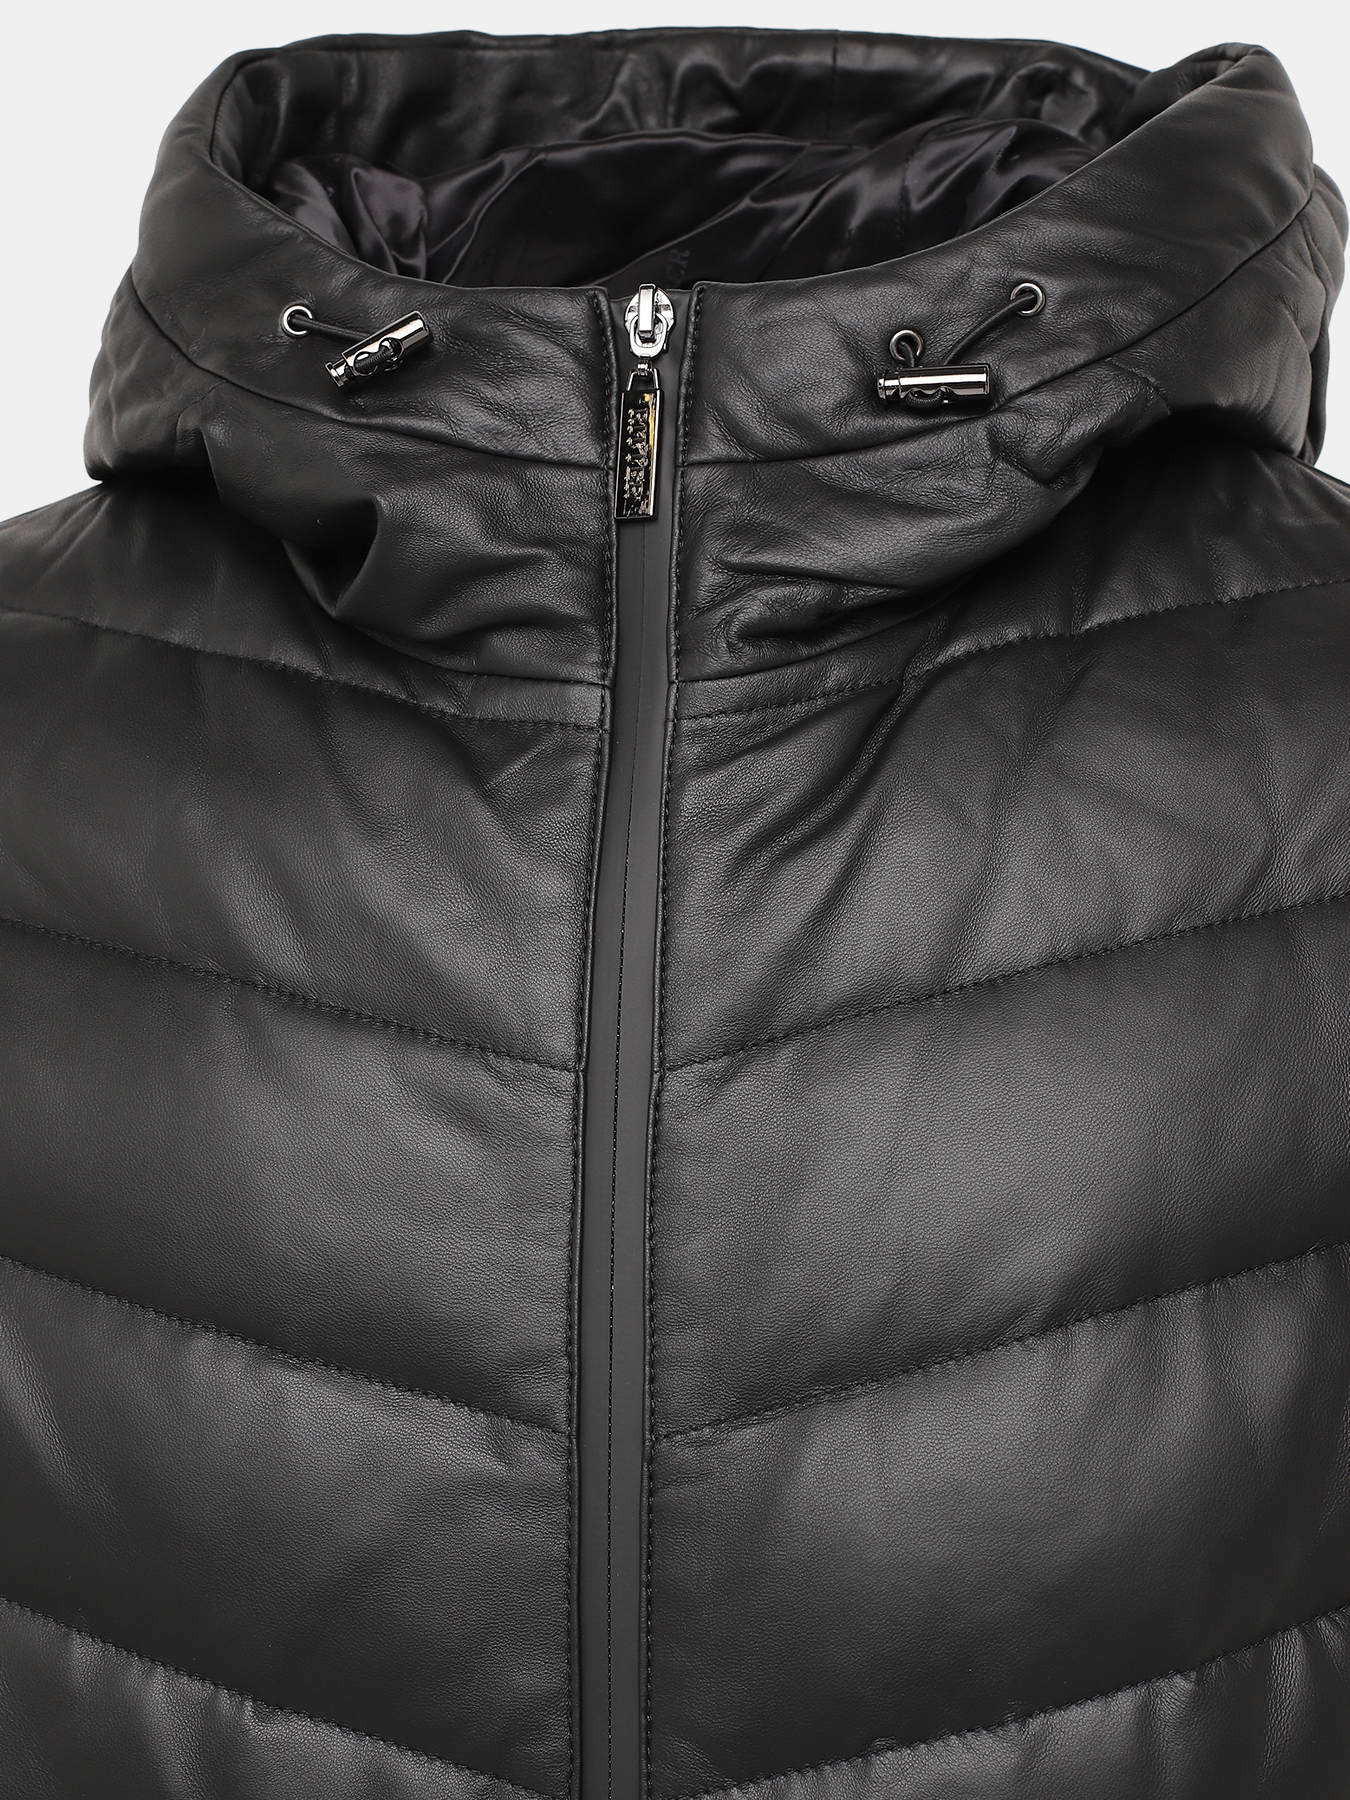 Кожаная куртка Ritter 417699-032, цвет черный, размер 62 - фото 4